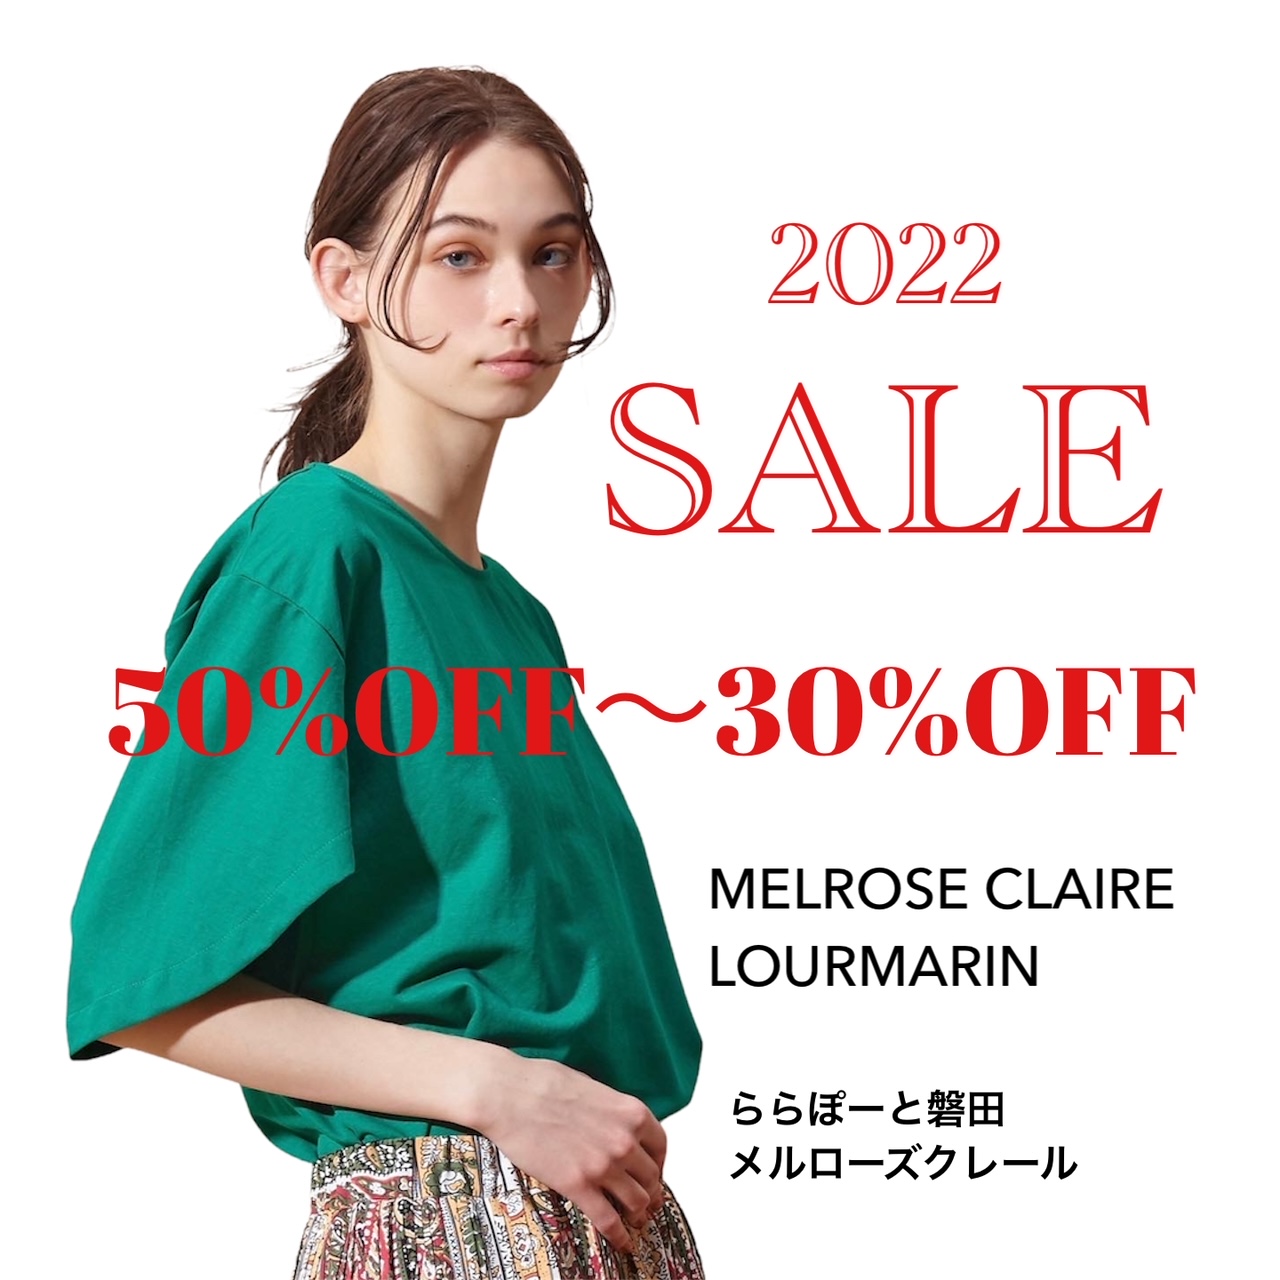 Melrose Claire Summer Sale